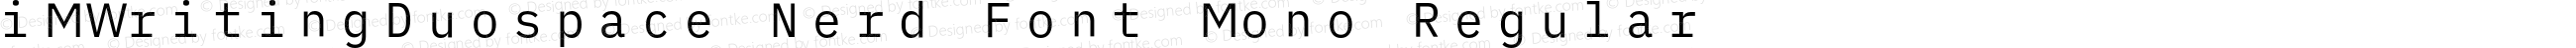 iM Writing Duospace Regular Nerd Font Complete Mono